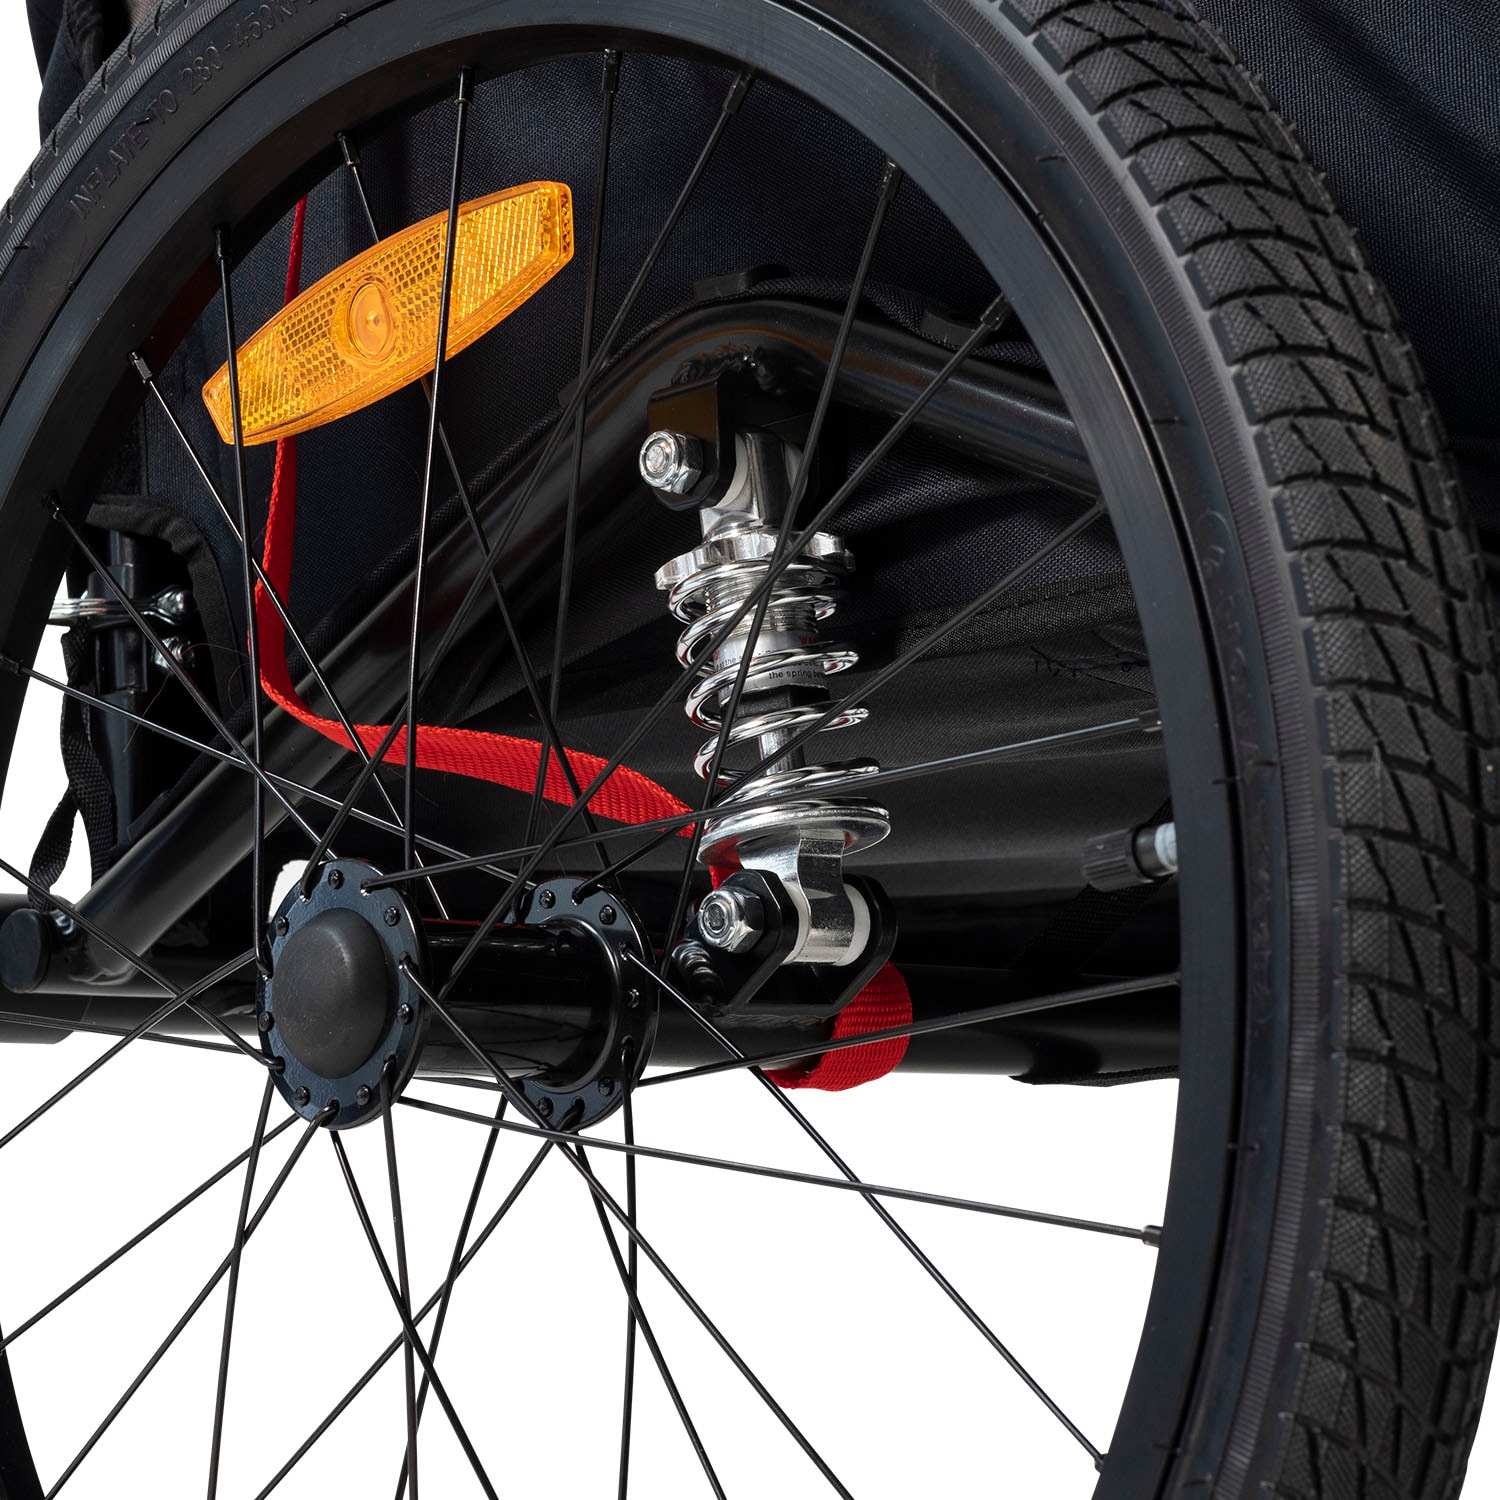 Cykelanhænger SunBee Supreme XL, med strollerkit